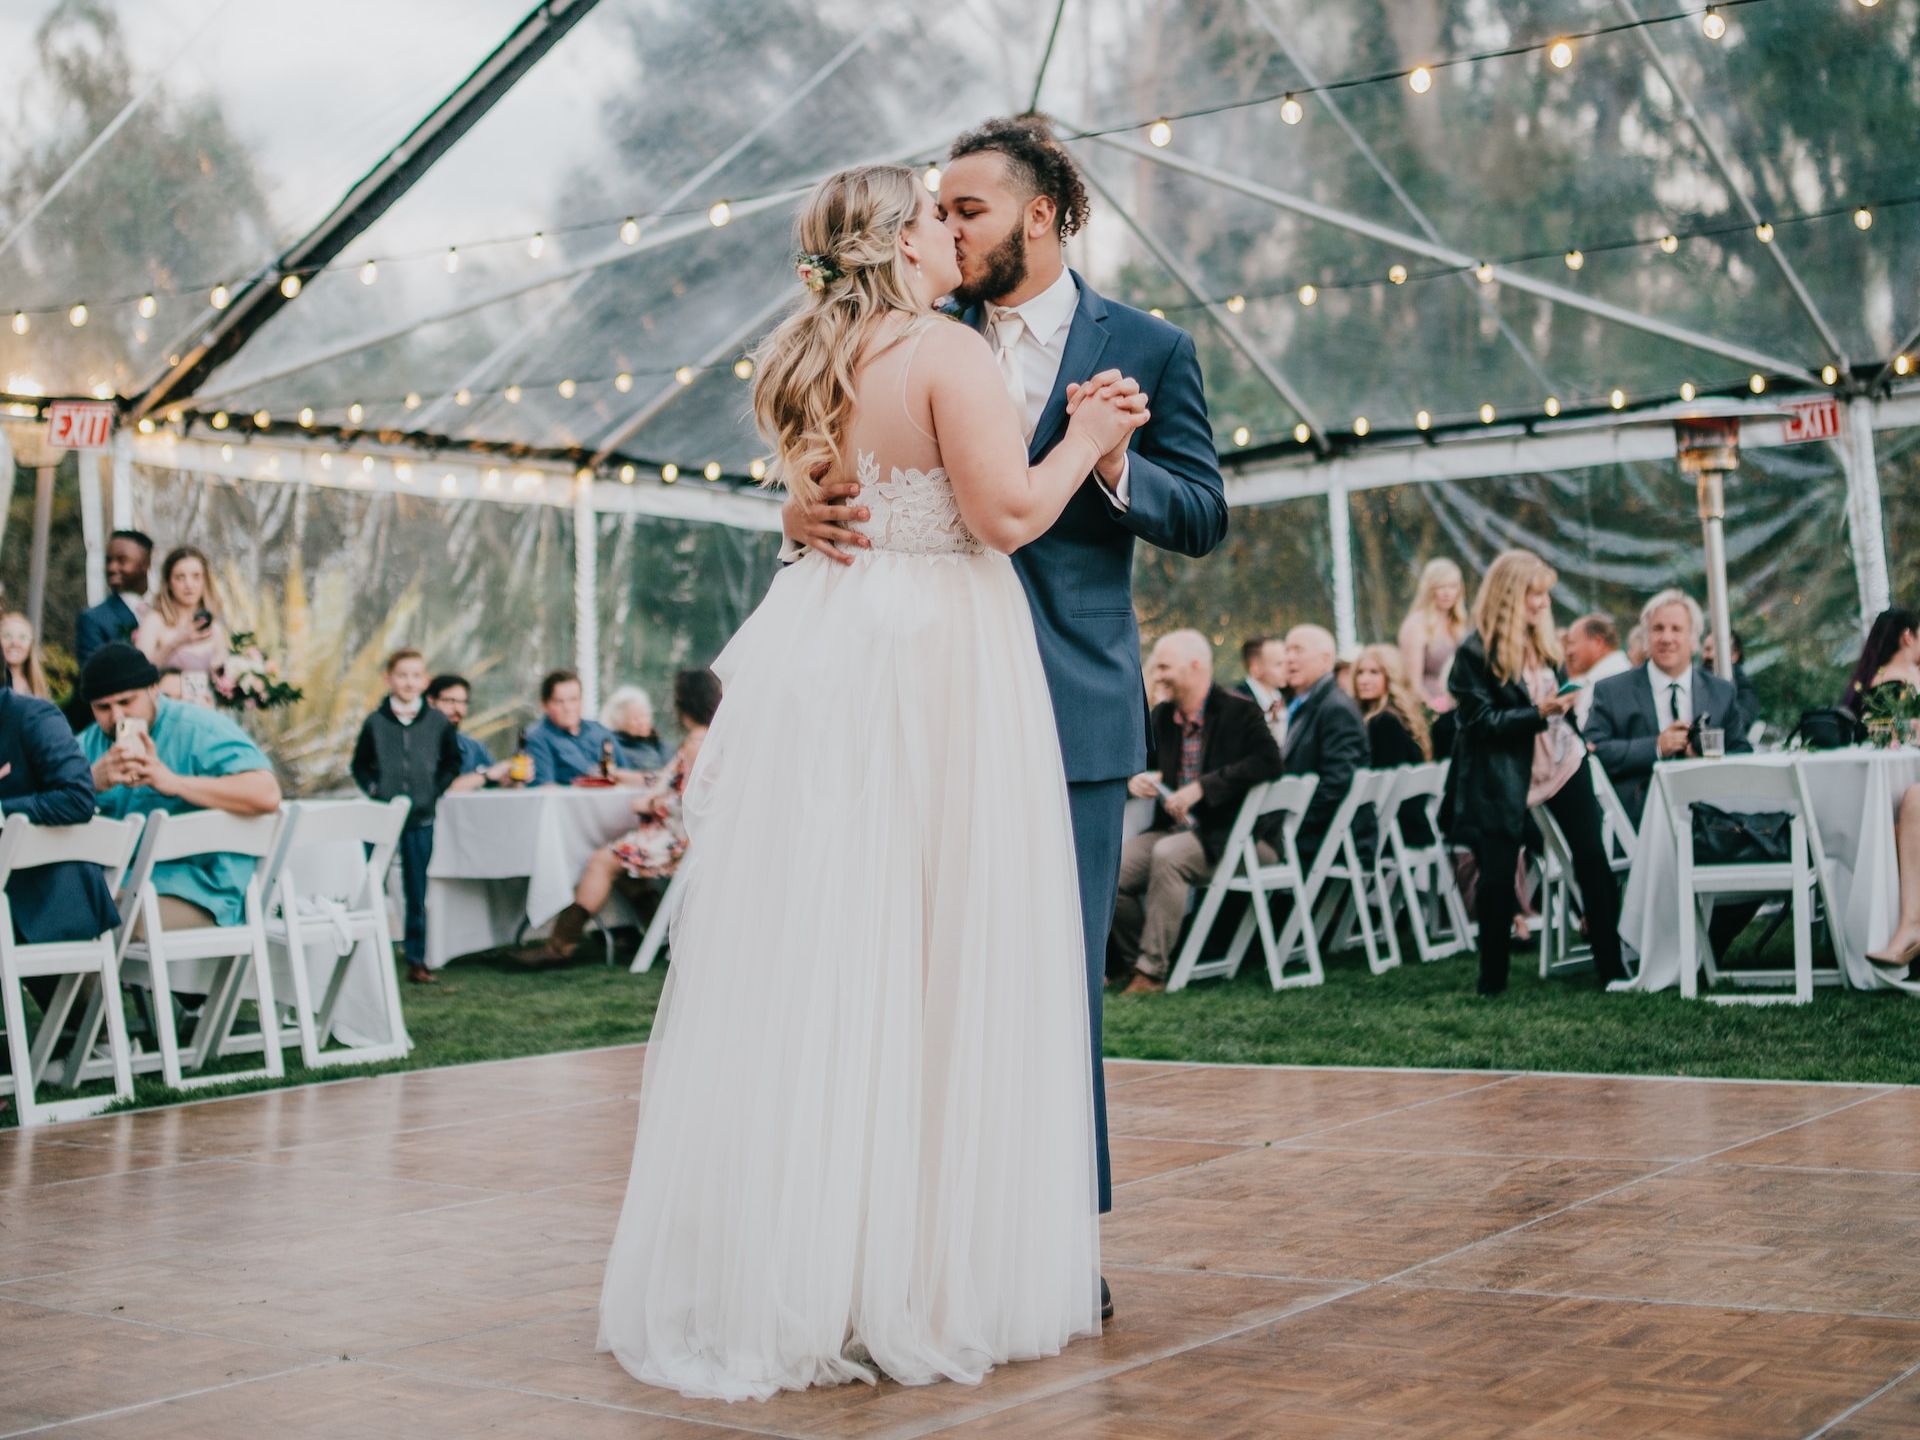 A bride and groom dancing.